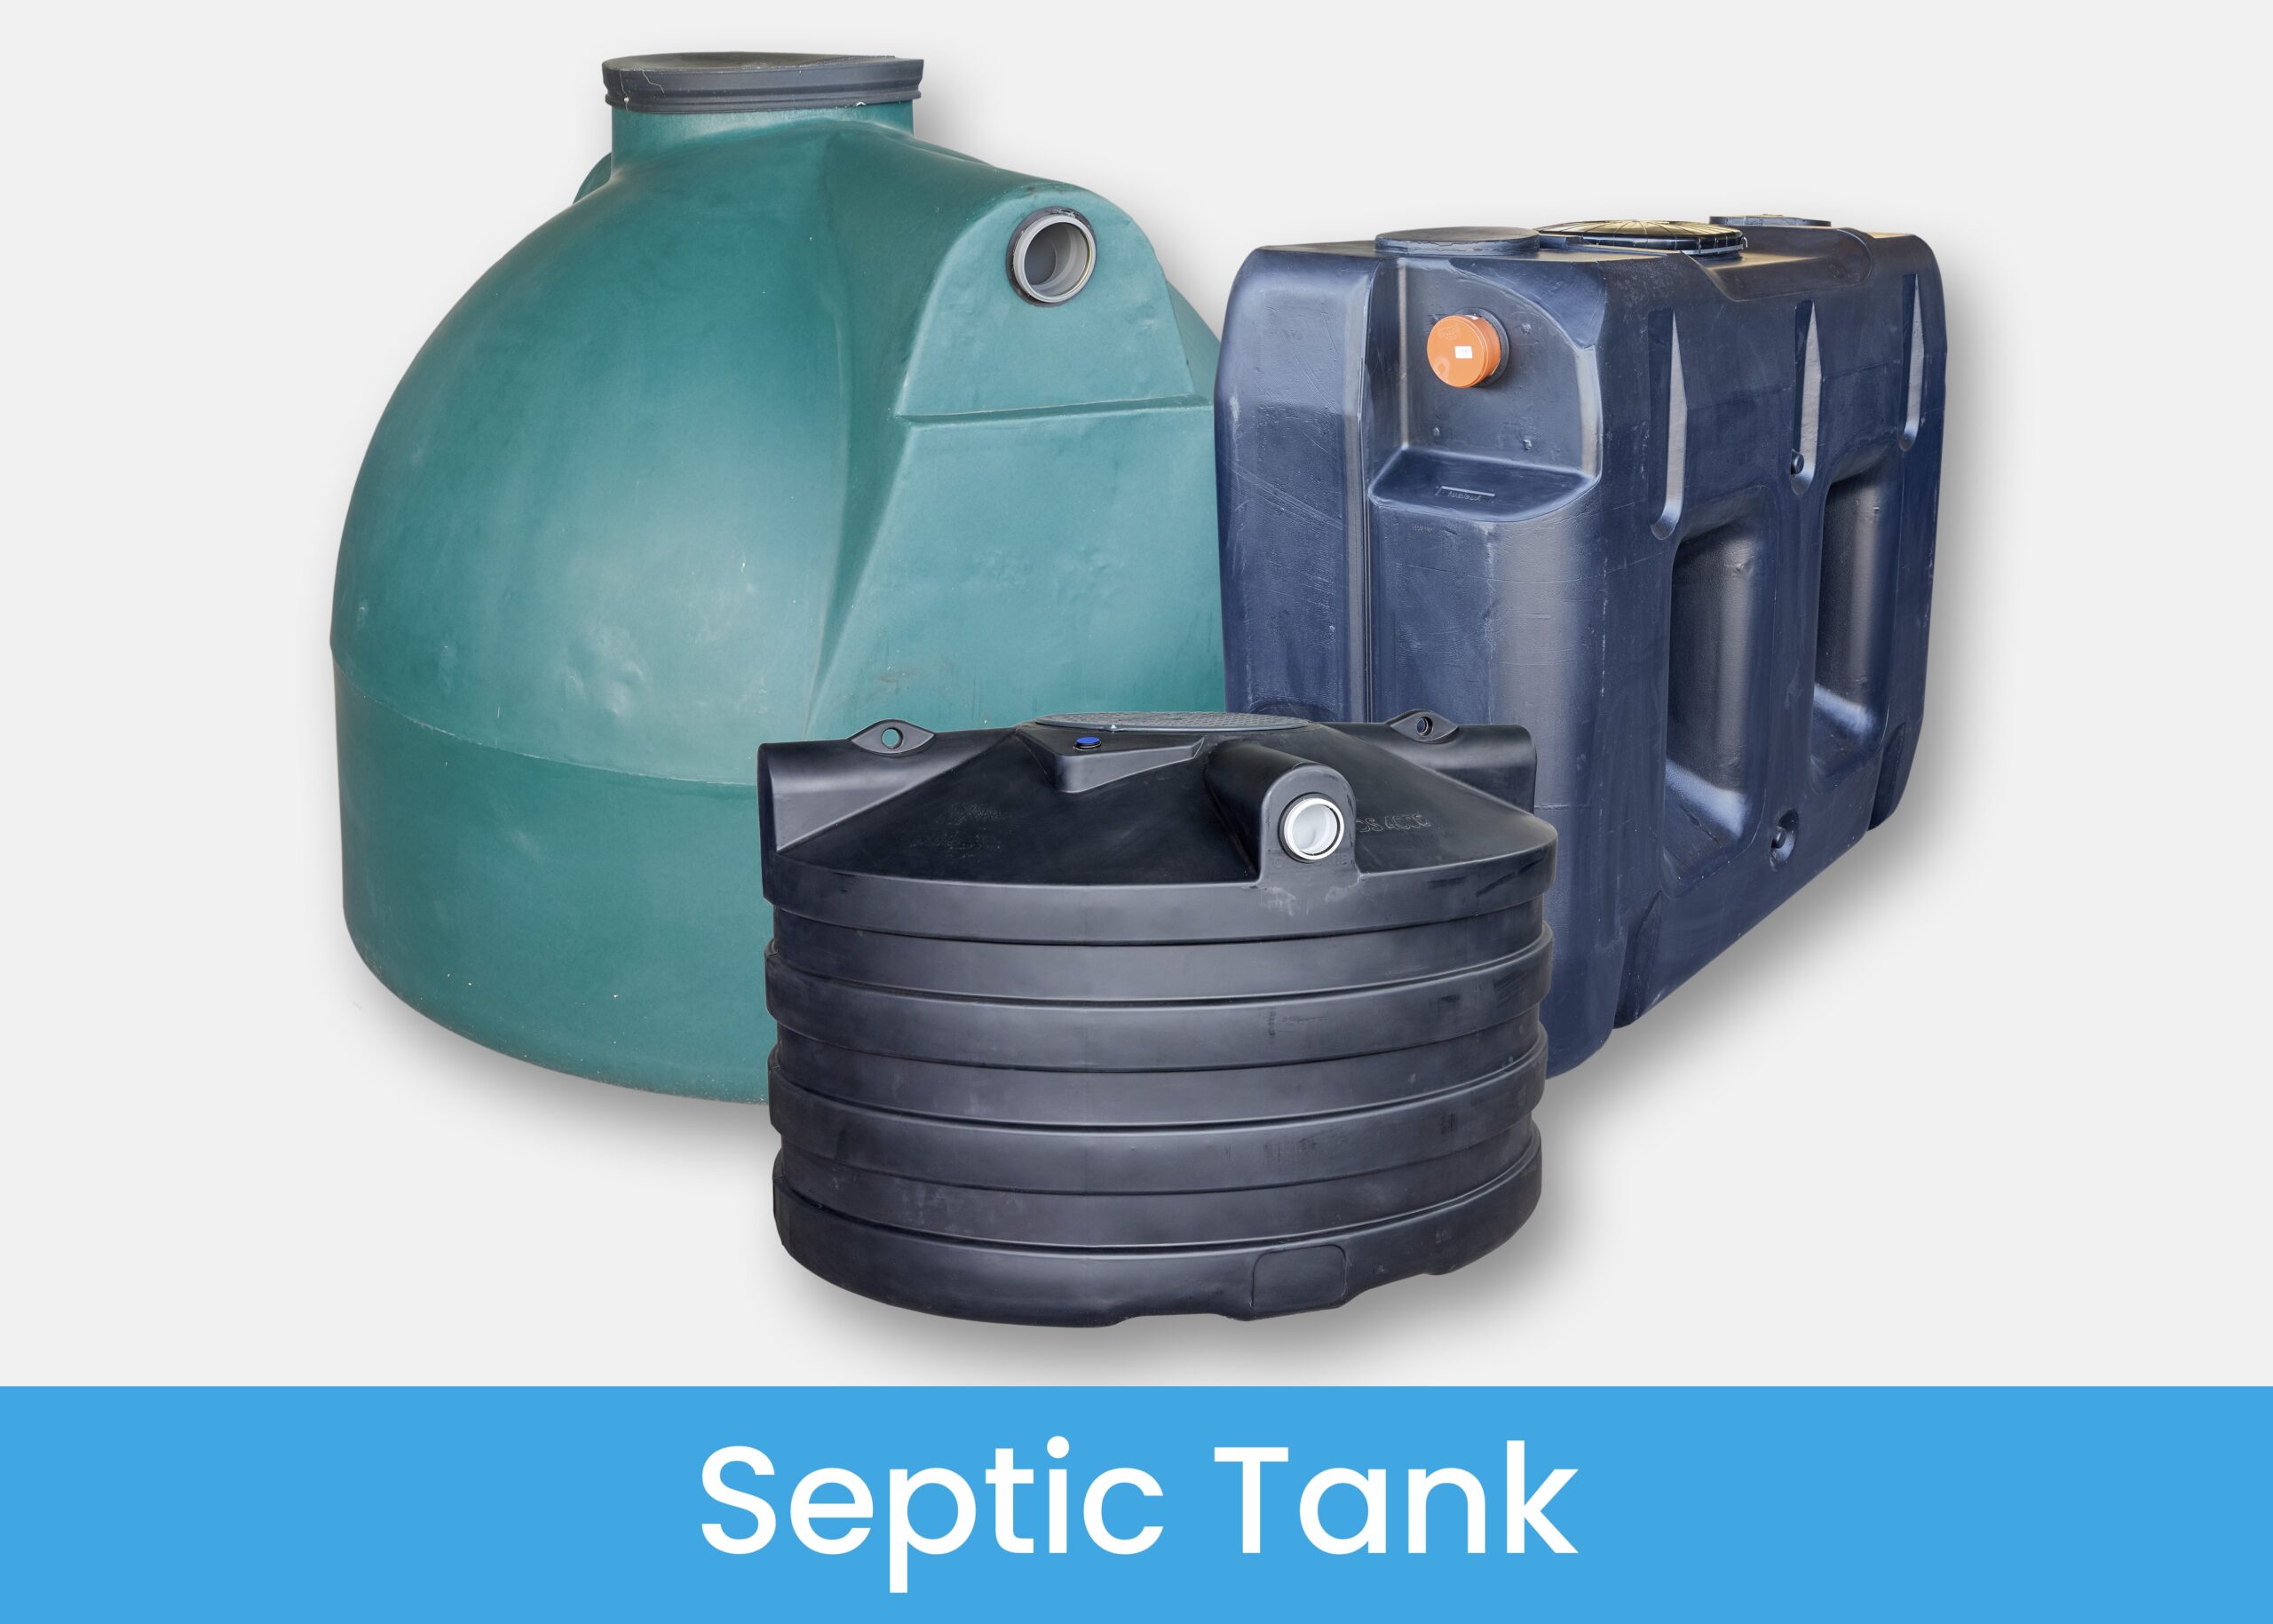 NL Septic Tank